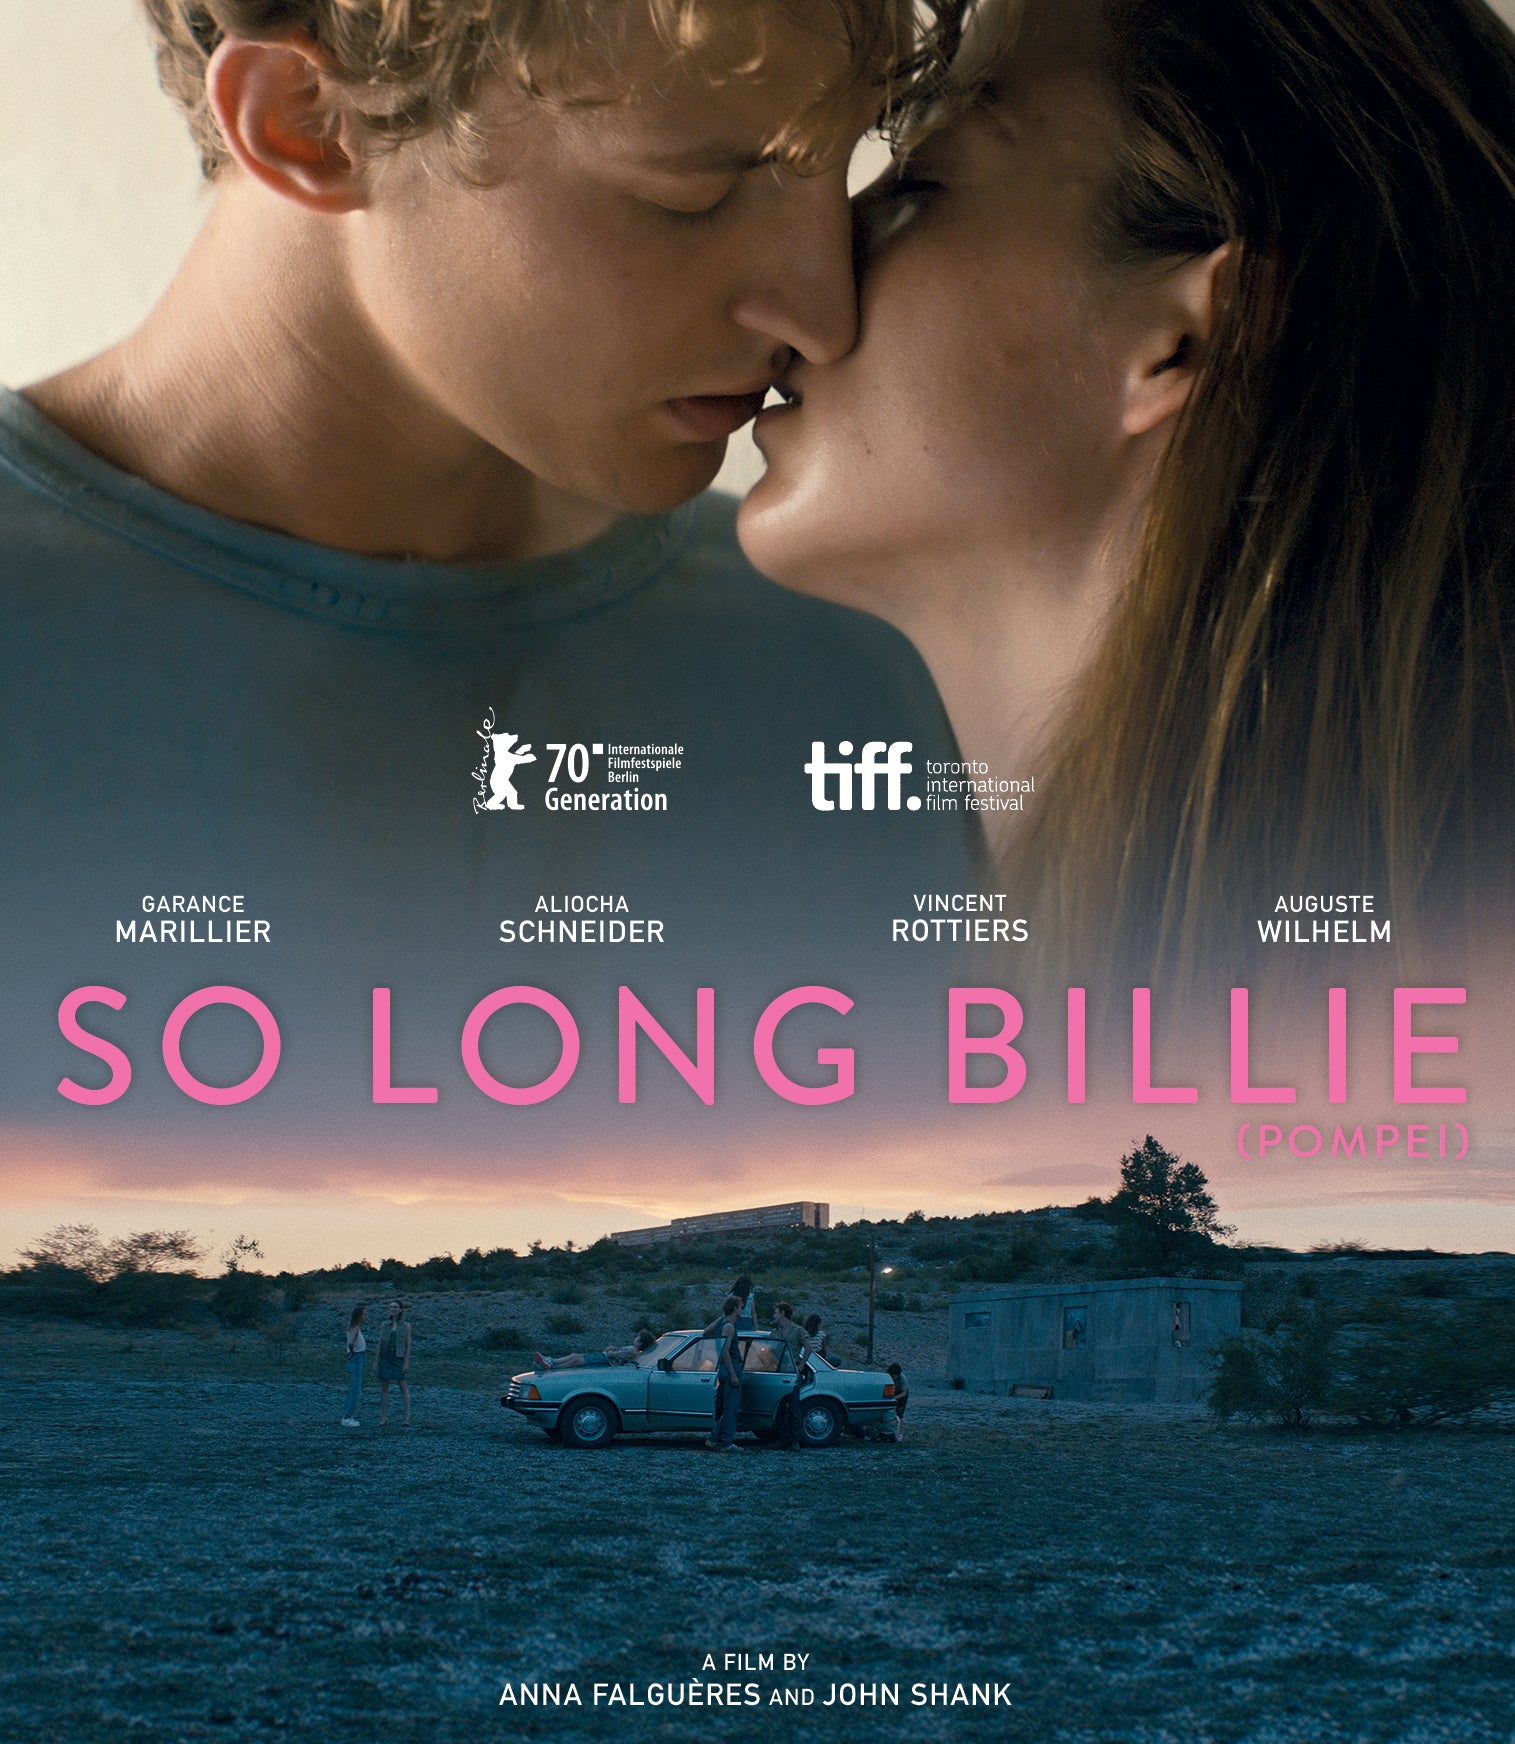 So Long Billie [Blu-ray] cover art